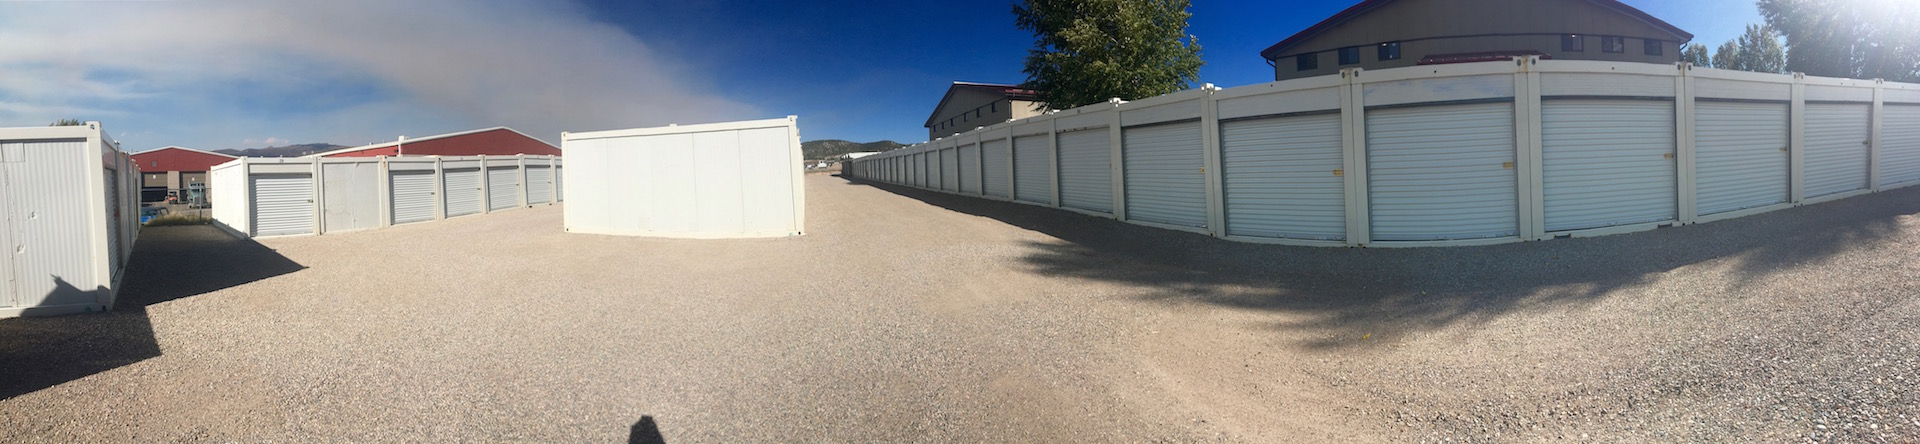 Self storage facilities in Gypsum, CO